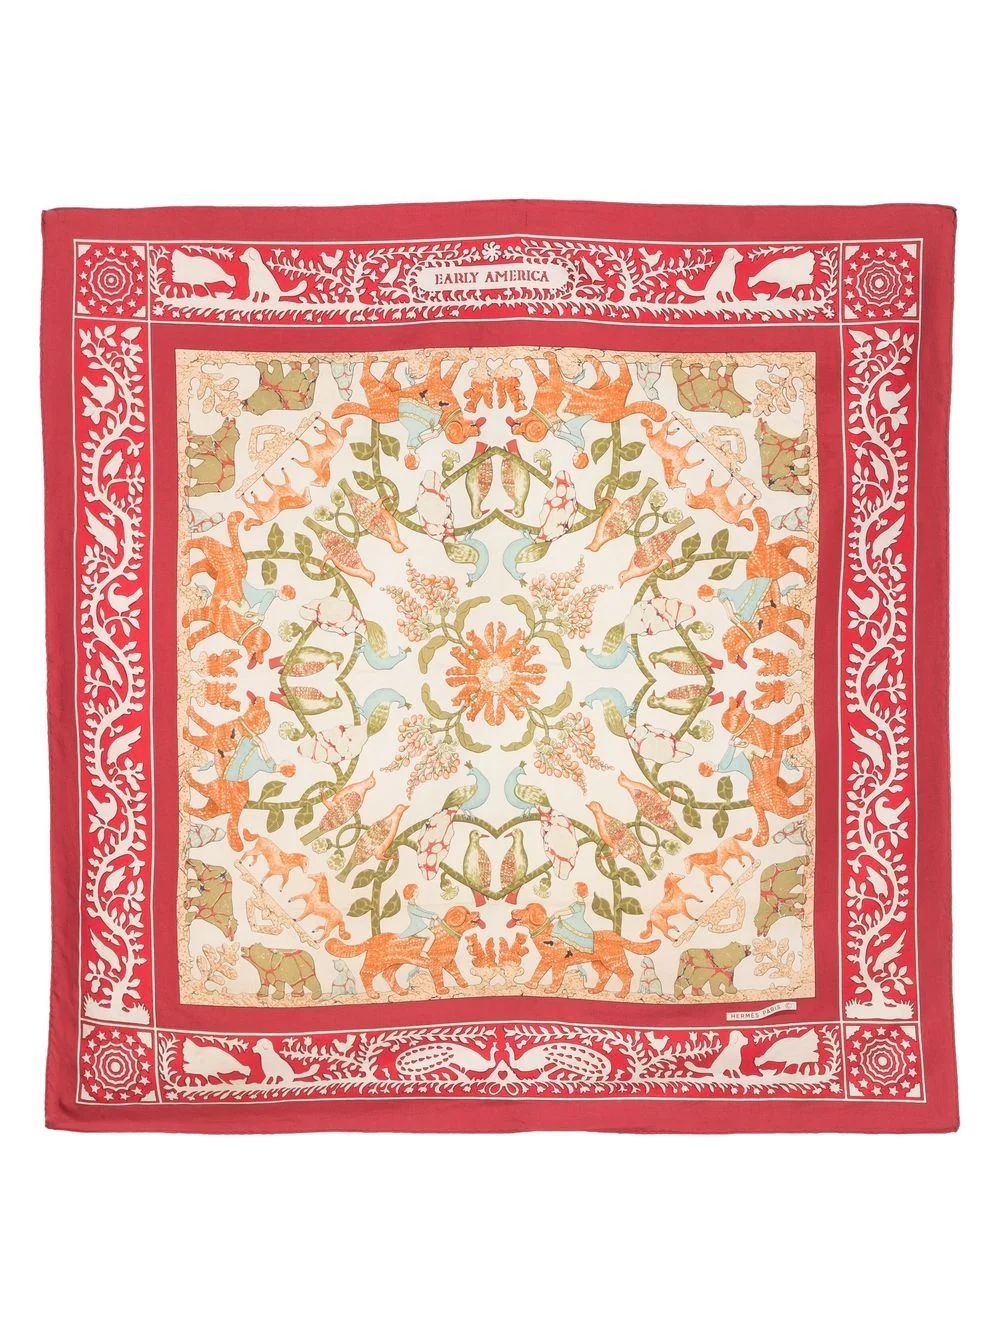 pre-owned Early America silk scarf | Farfetch Global